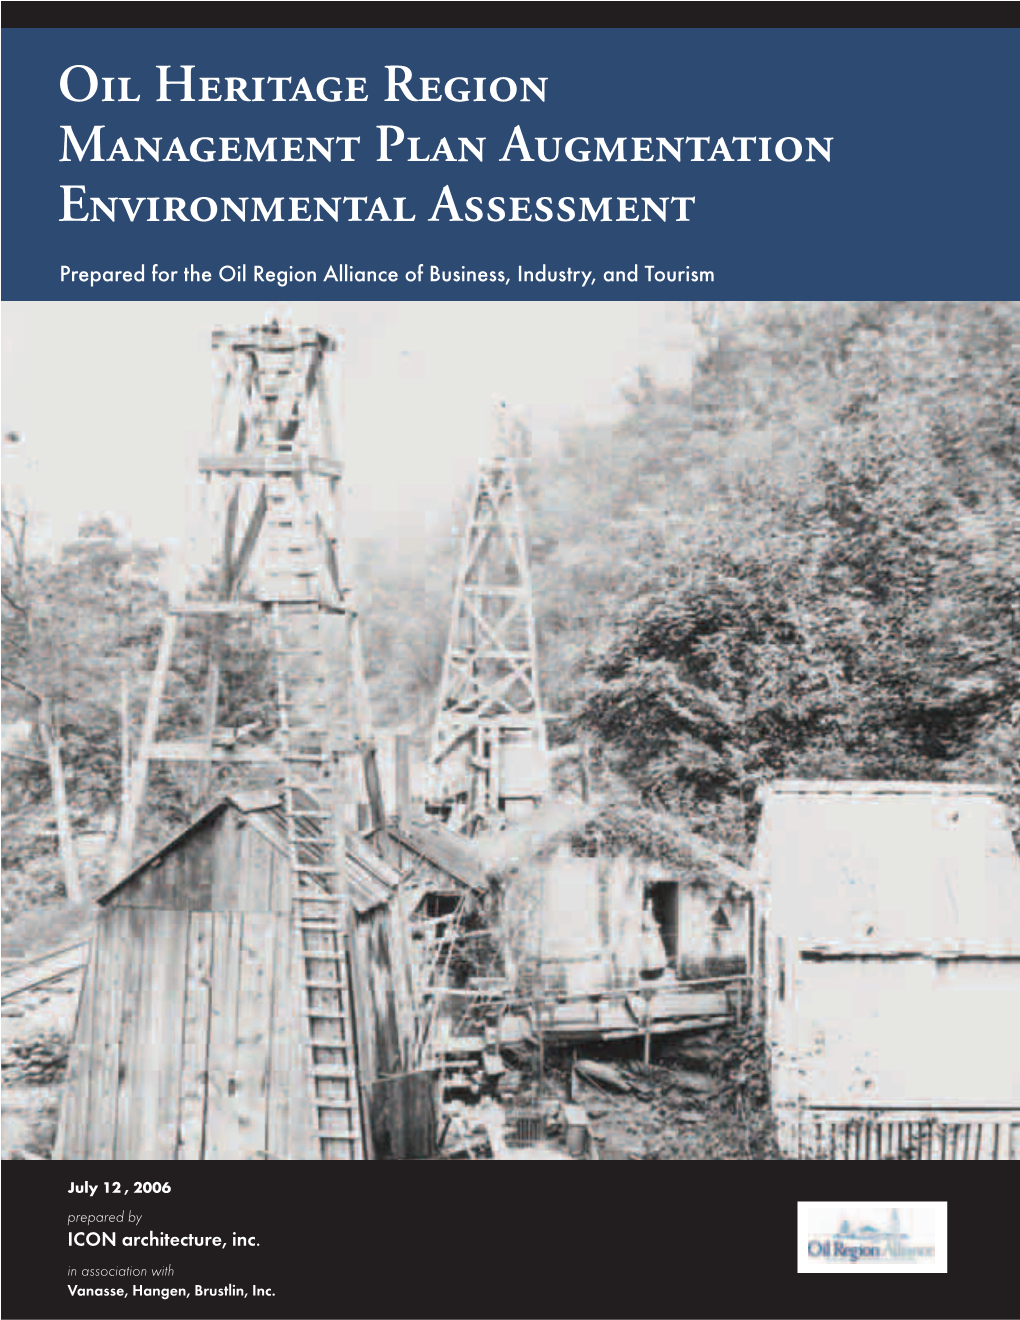 Oil Heritage Region Management Plan Augmentation Environmental Assessment